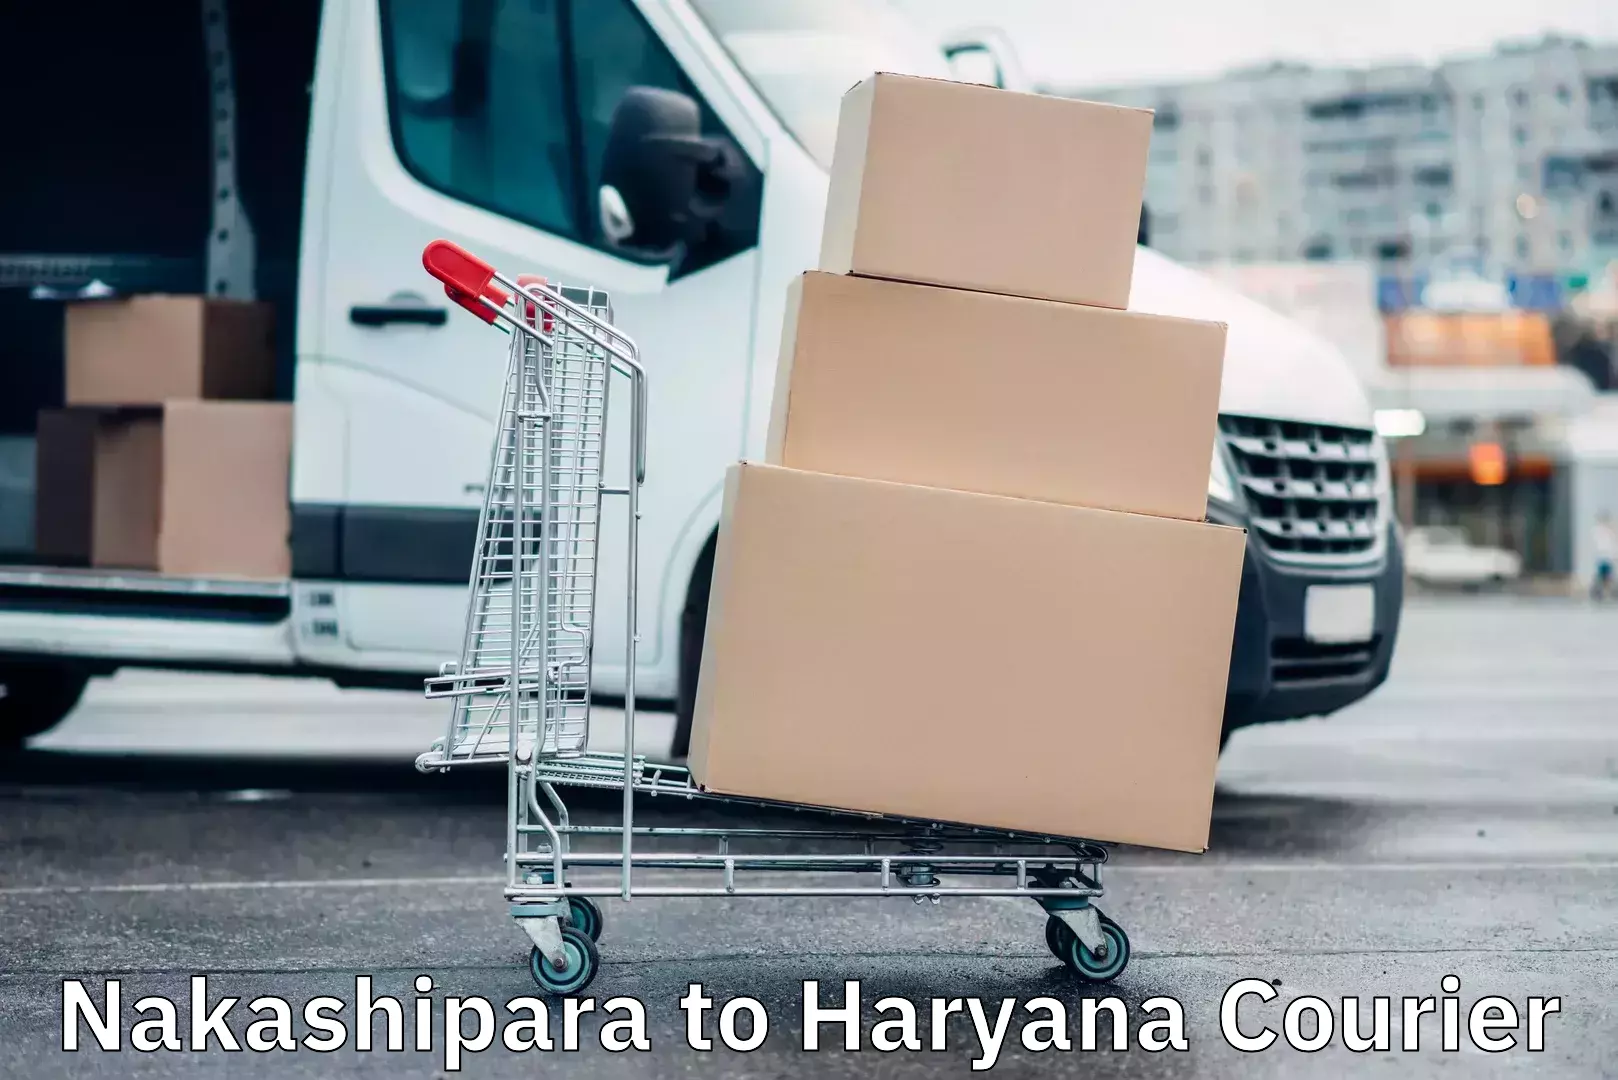 Courier service comparison Nakashipara to Haryana